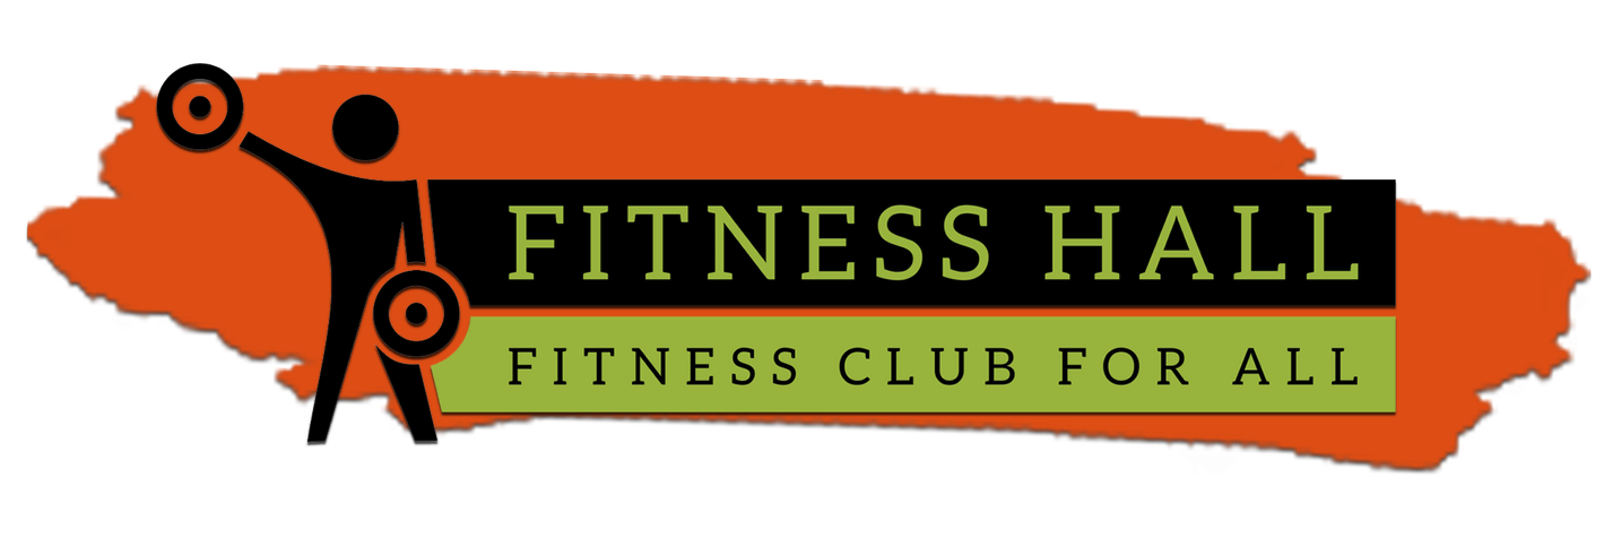 Fitness Hall logo image